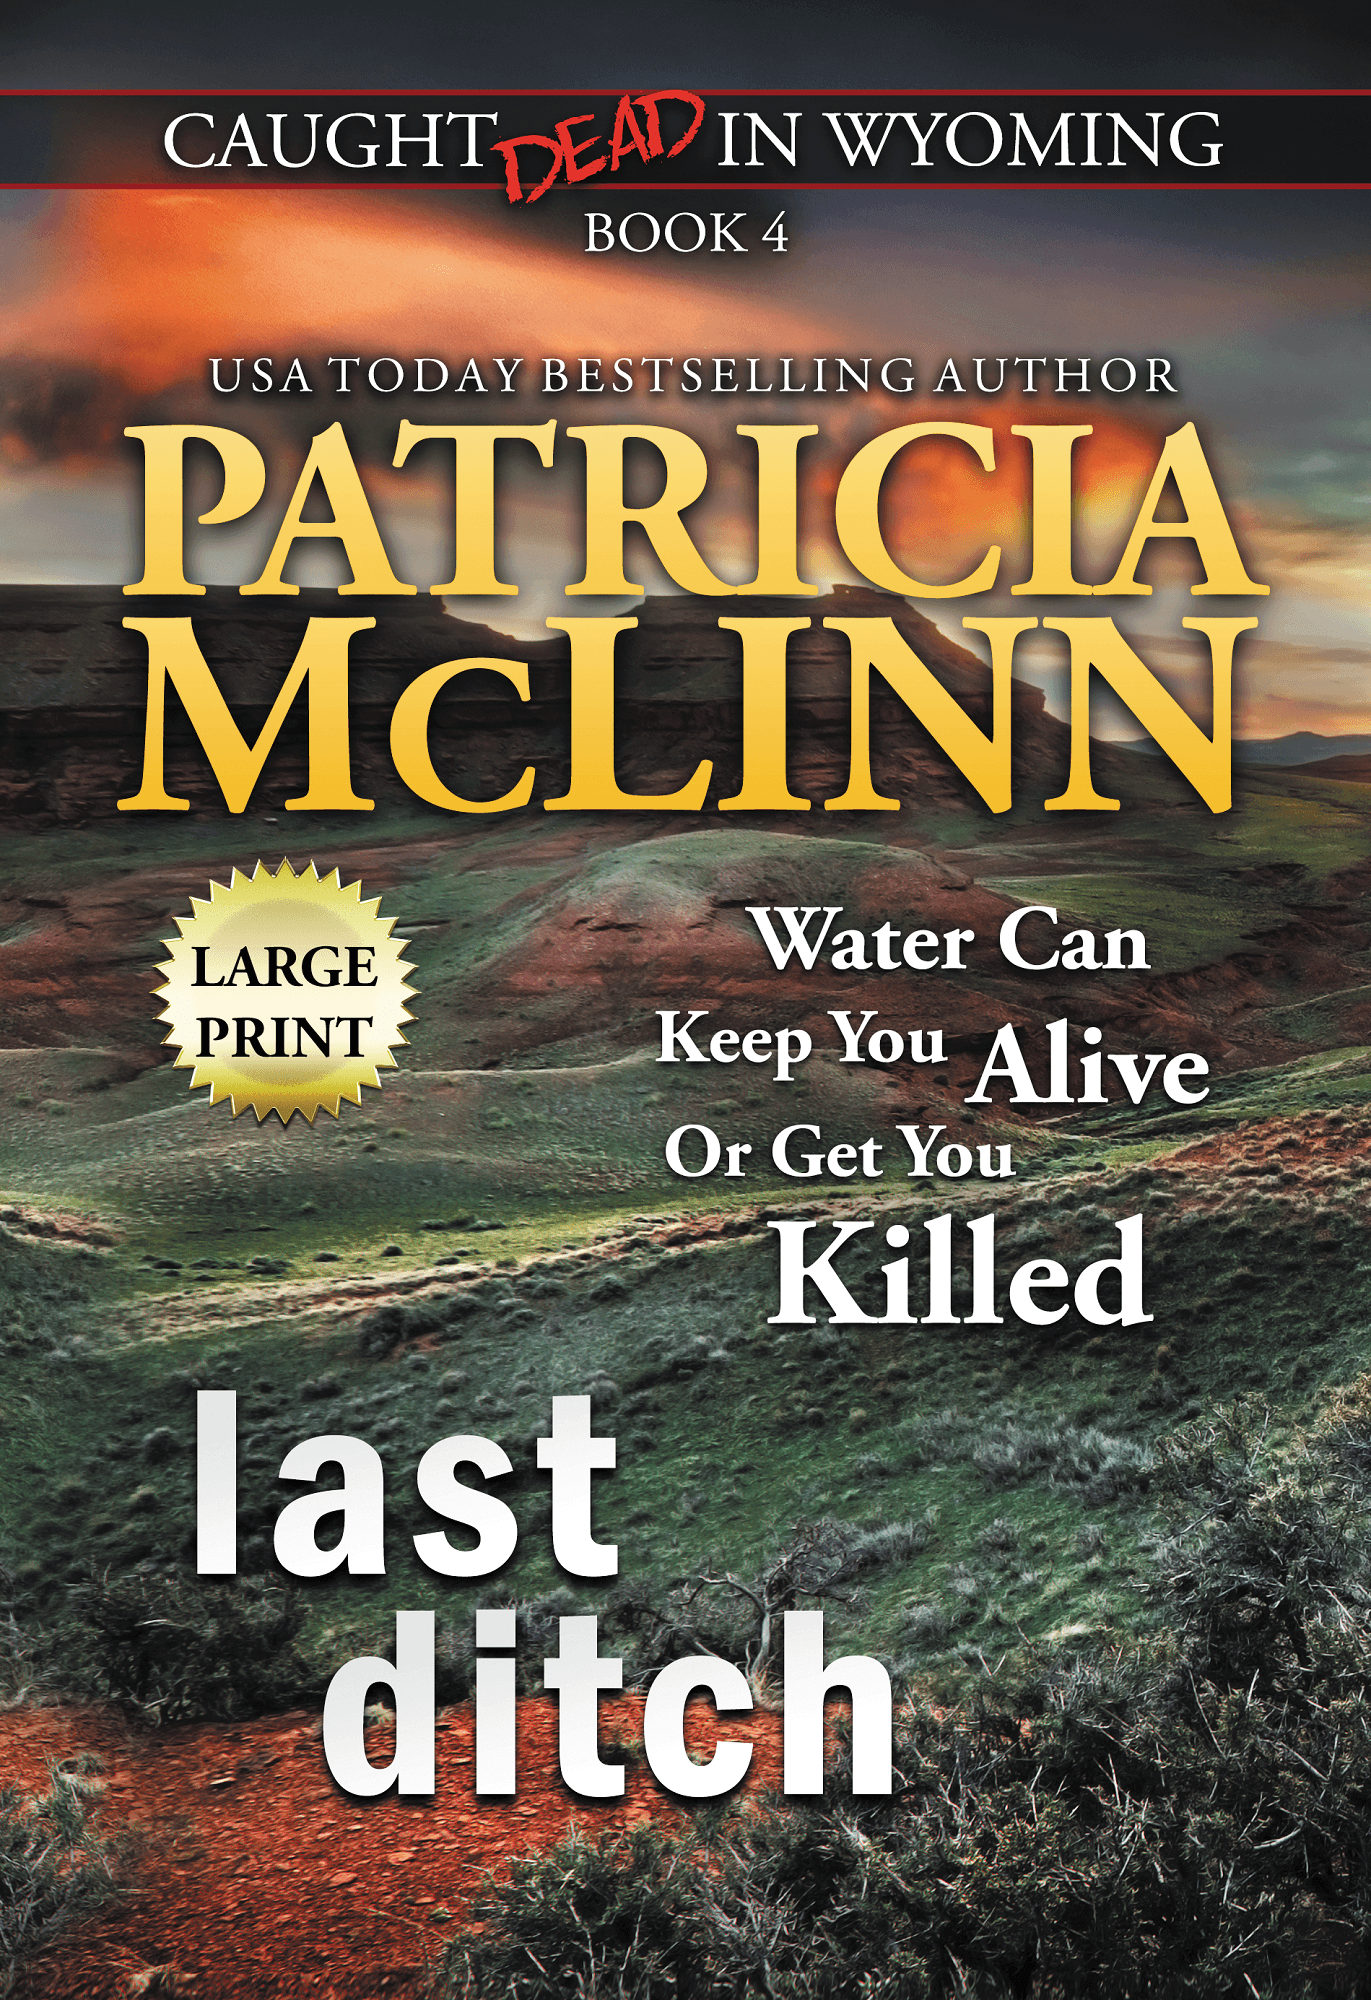 Last Ditch: Large Print - Patricia McLinn